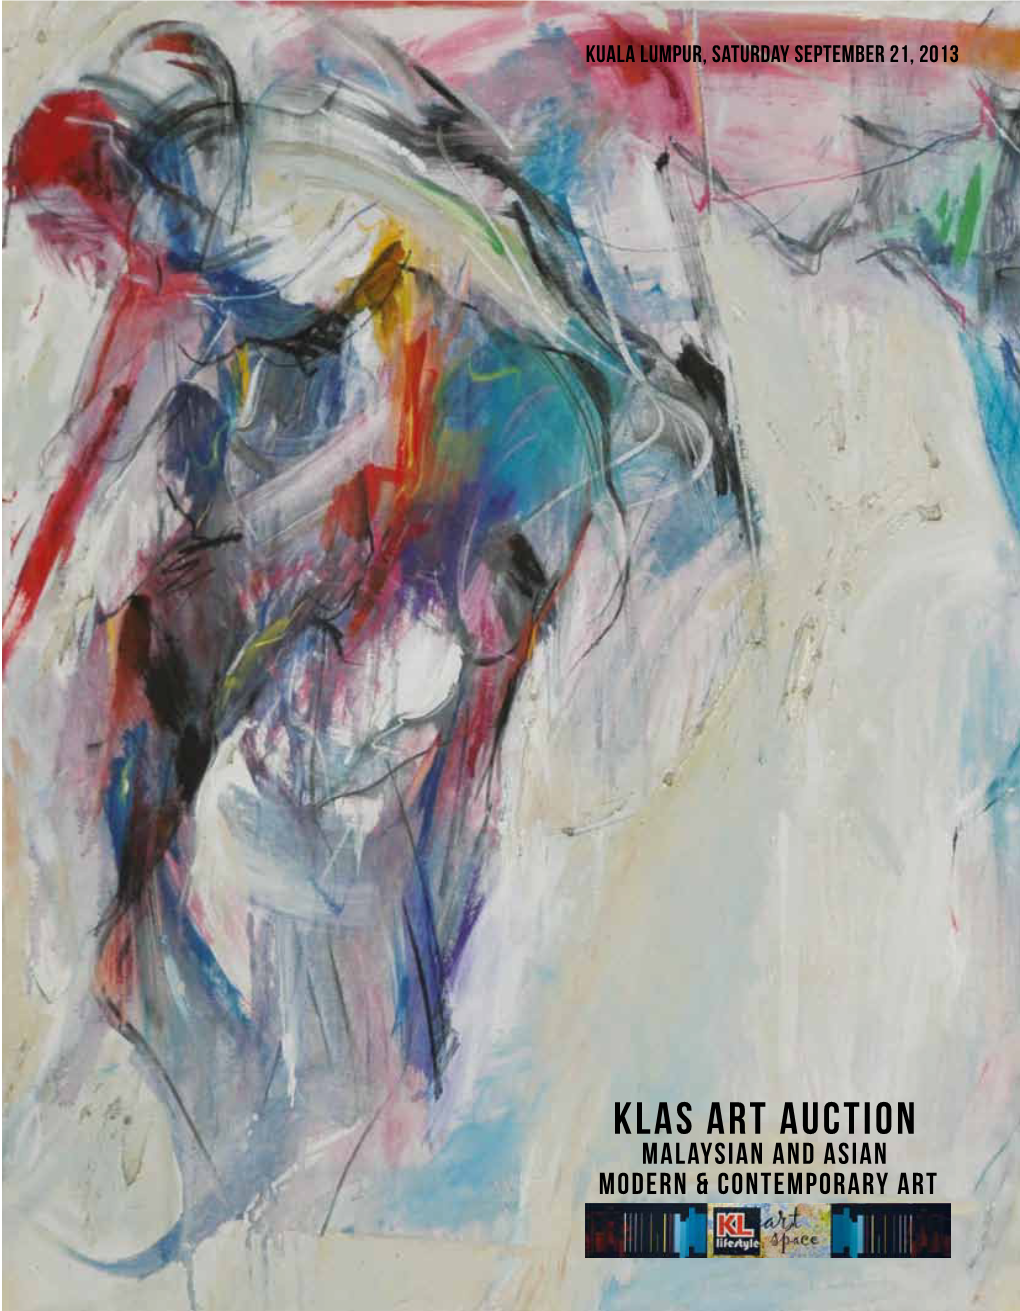 KLAS ART Auction Malaysian and Asian Modern & Contemporary Art Contemporary & Modern Asian and Malaysian Auction ART KLAS Kuala Lumpur, September 21, 2013